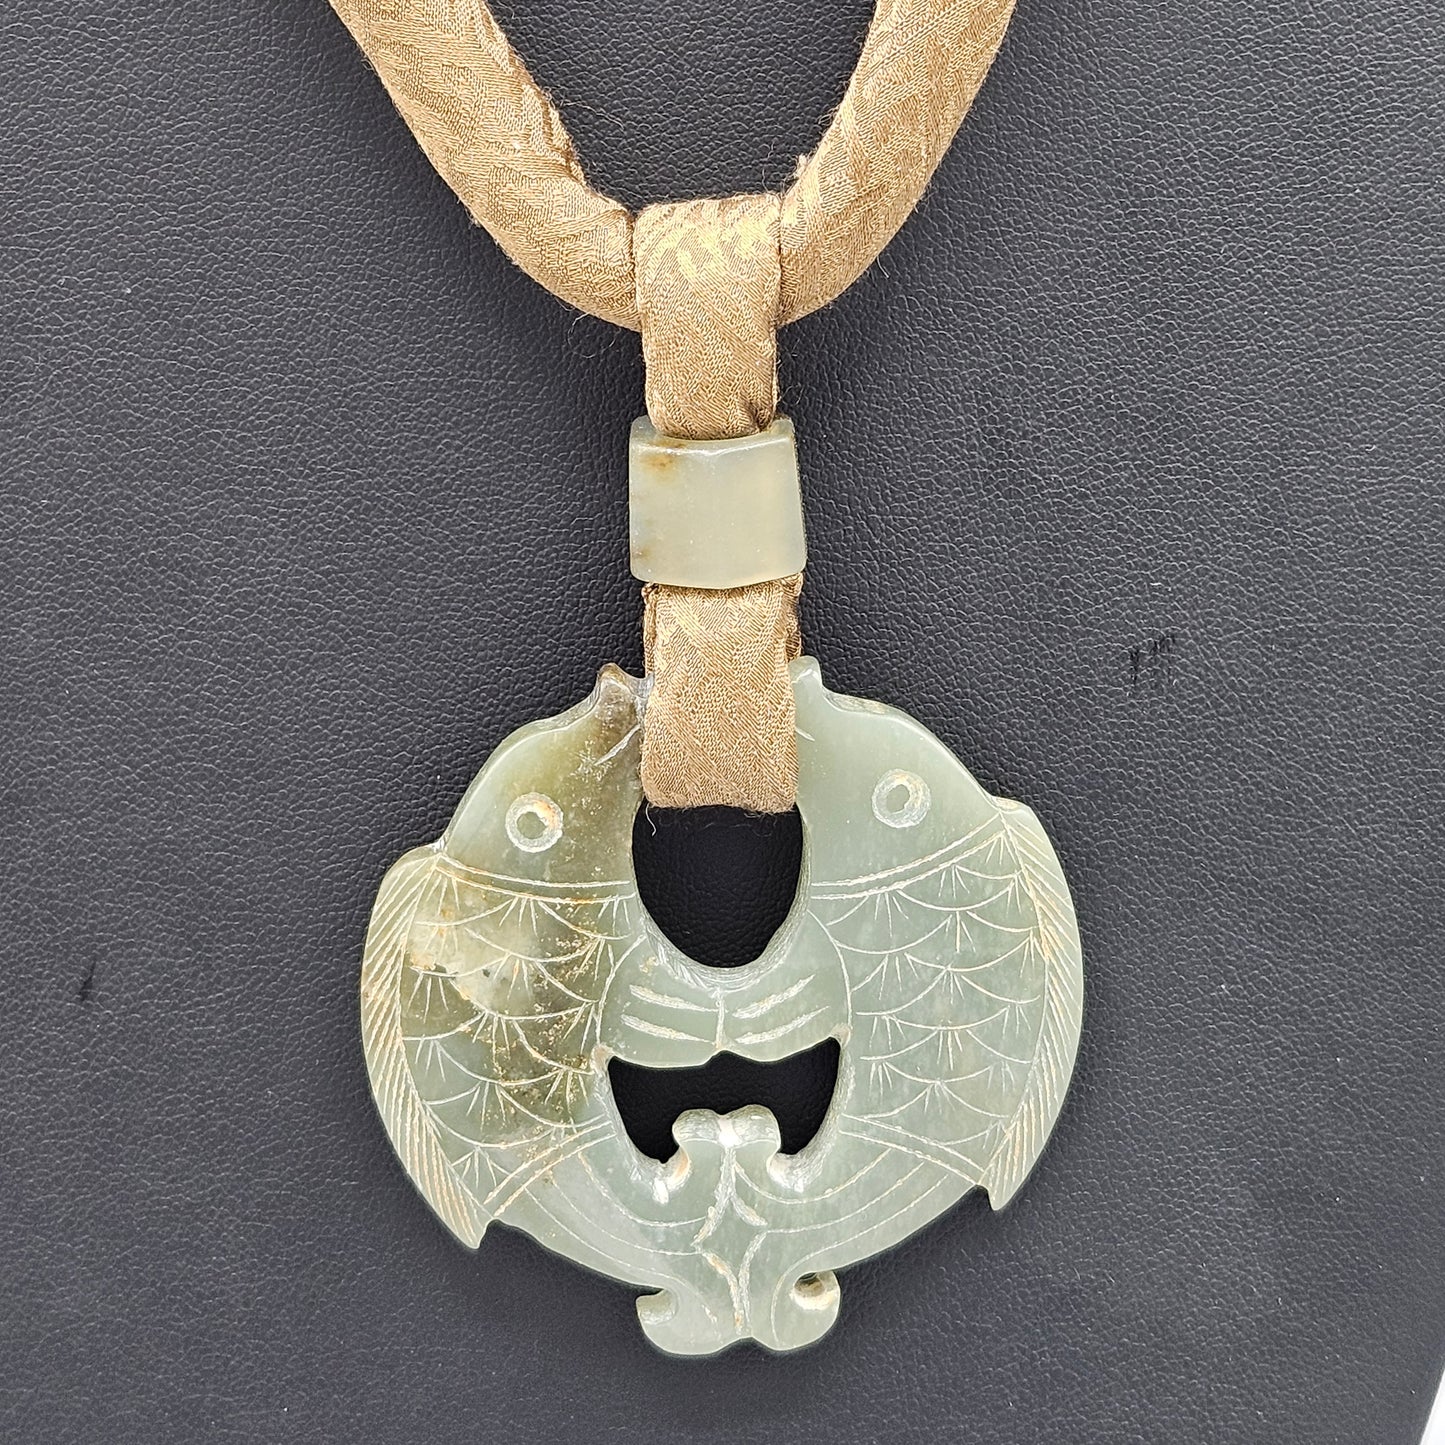 Vintage Carved Jade Fish Pendant Necklace